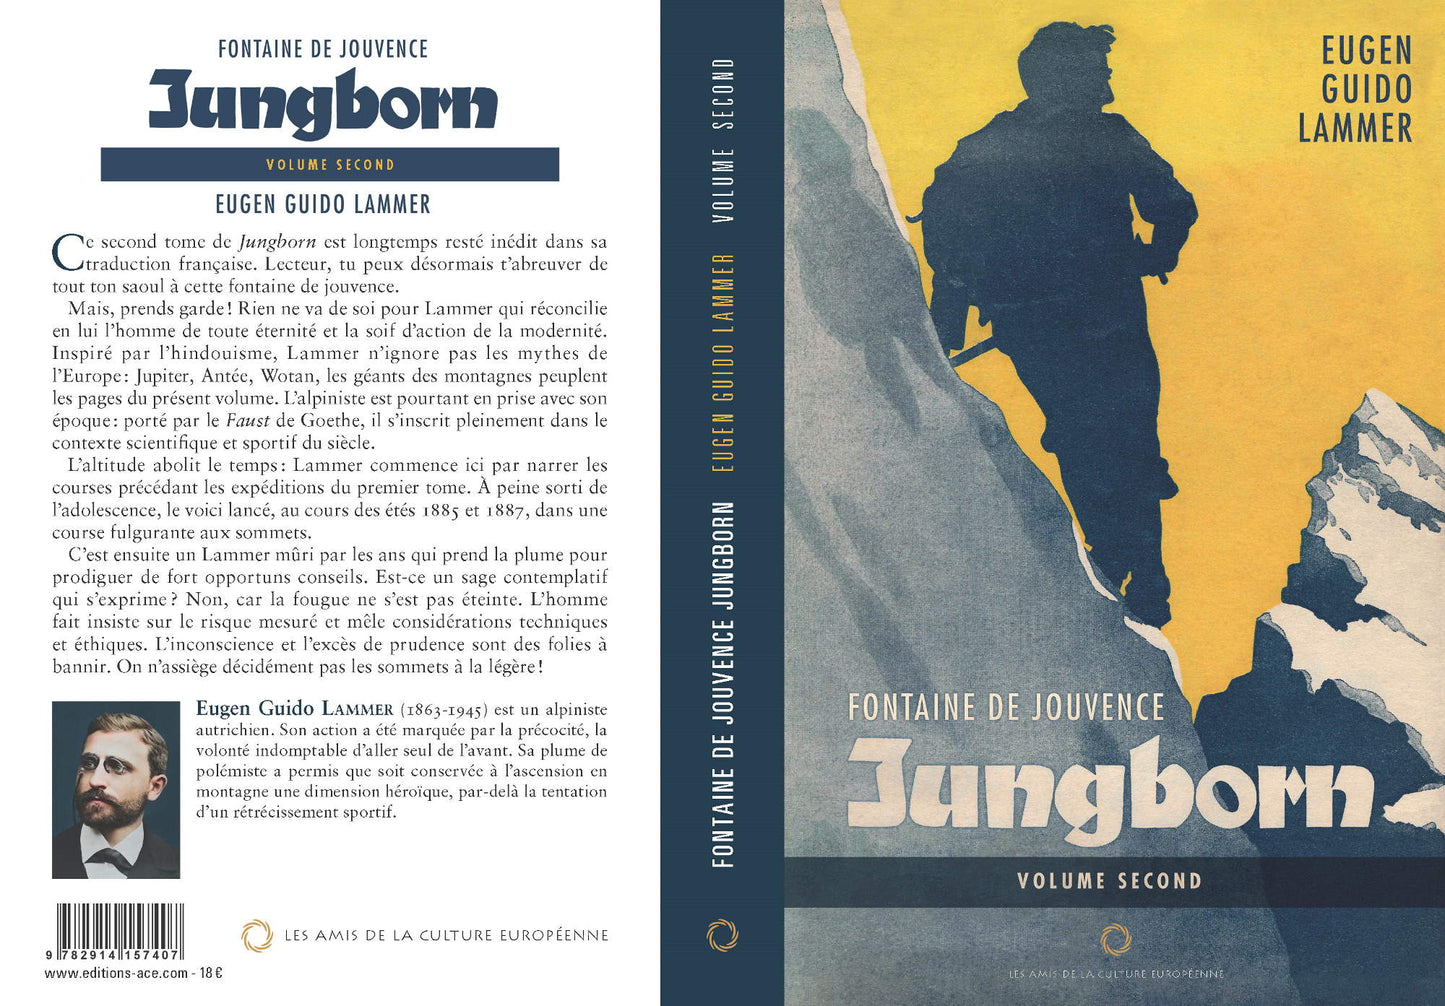 Jungborn – Fontaine de Jouvence Volume 2 – Eugen Guido Lammer